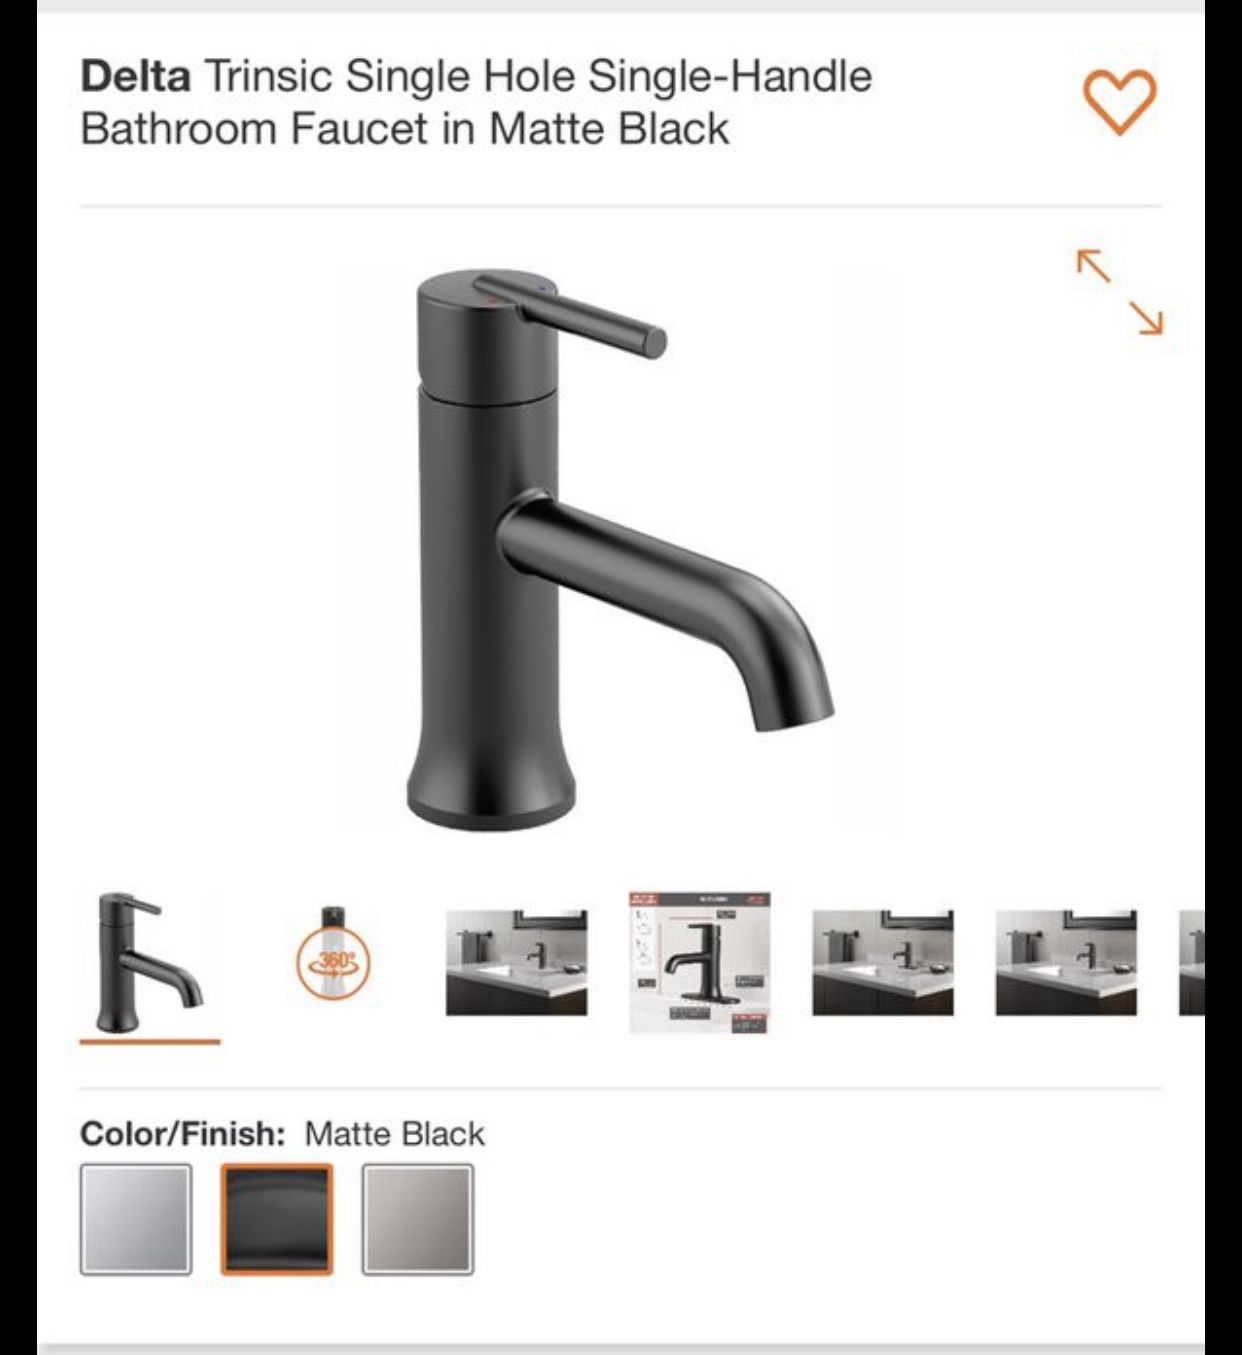 Delta Trinsic Single Hole Single-Handle Bathroom Faucet in Matte Black